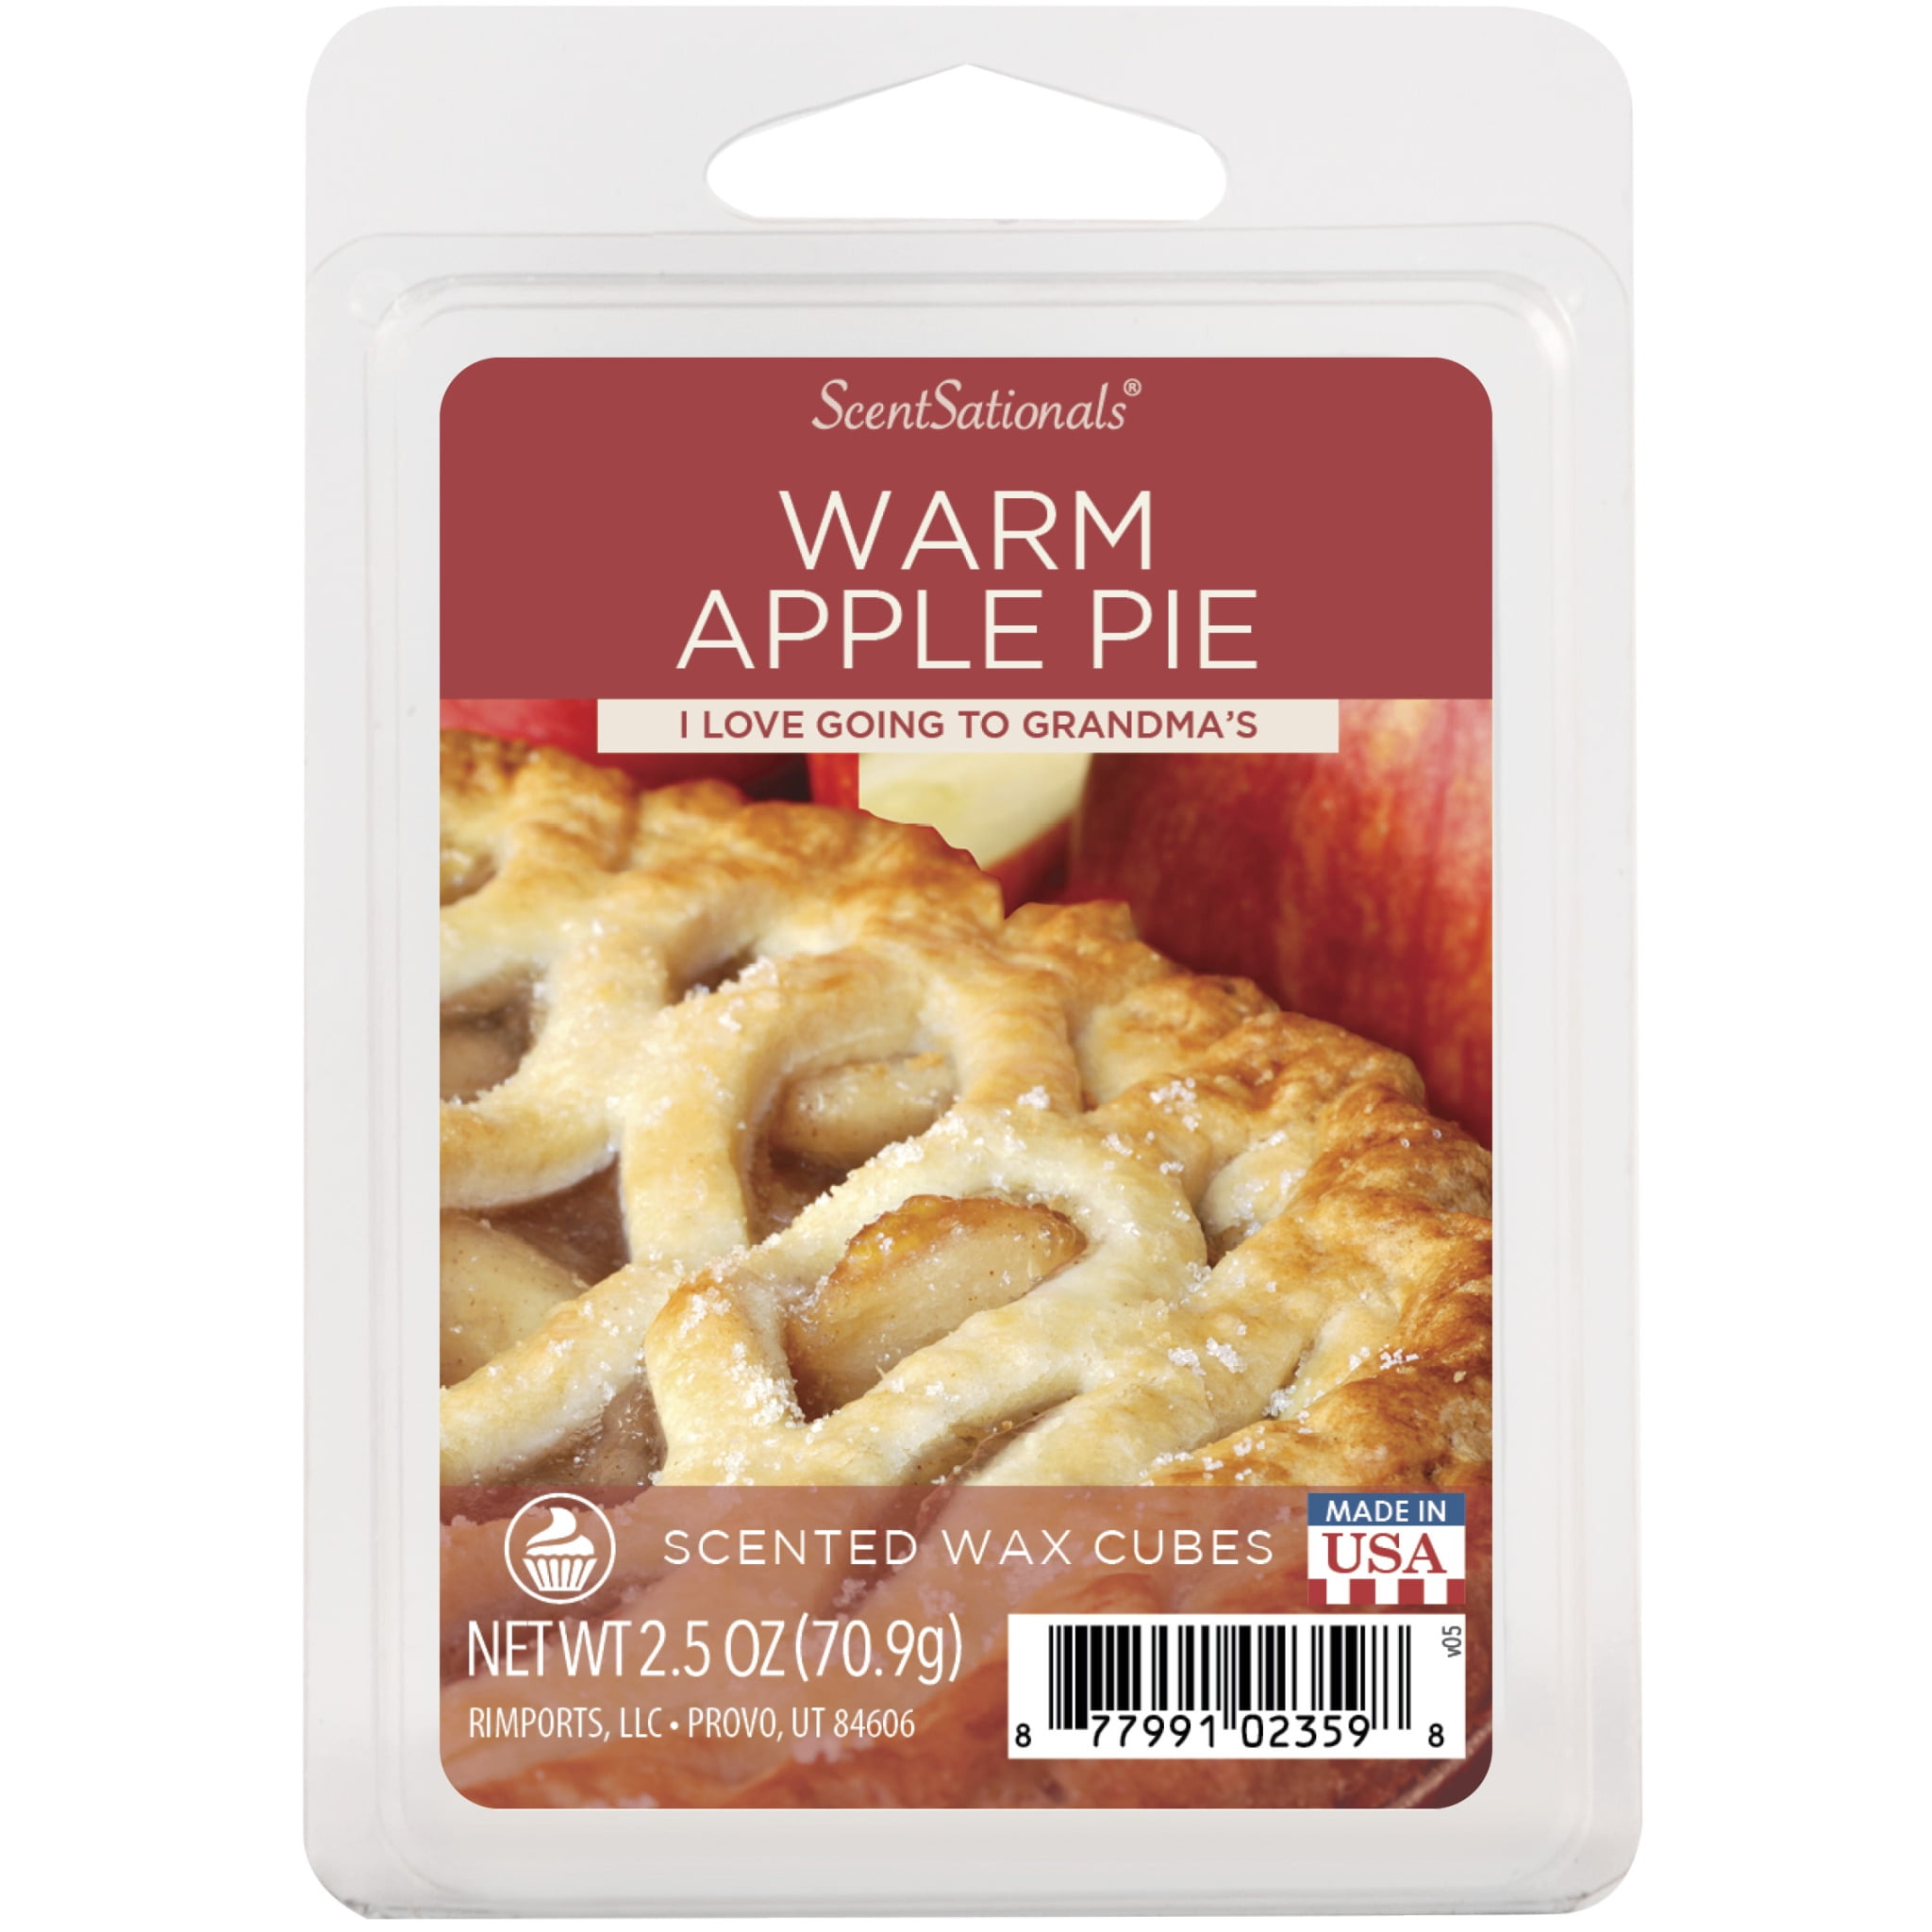 Hot Apple Pie 2.5oz Wax Melt - Candle Warmers